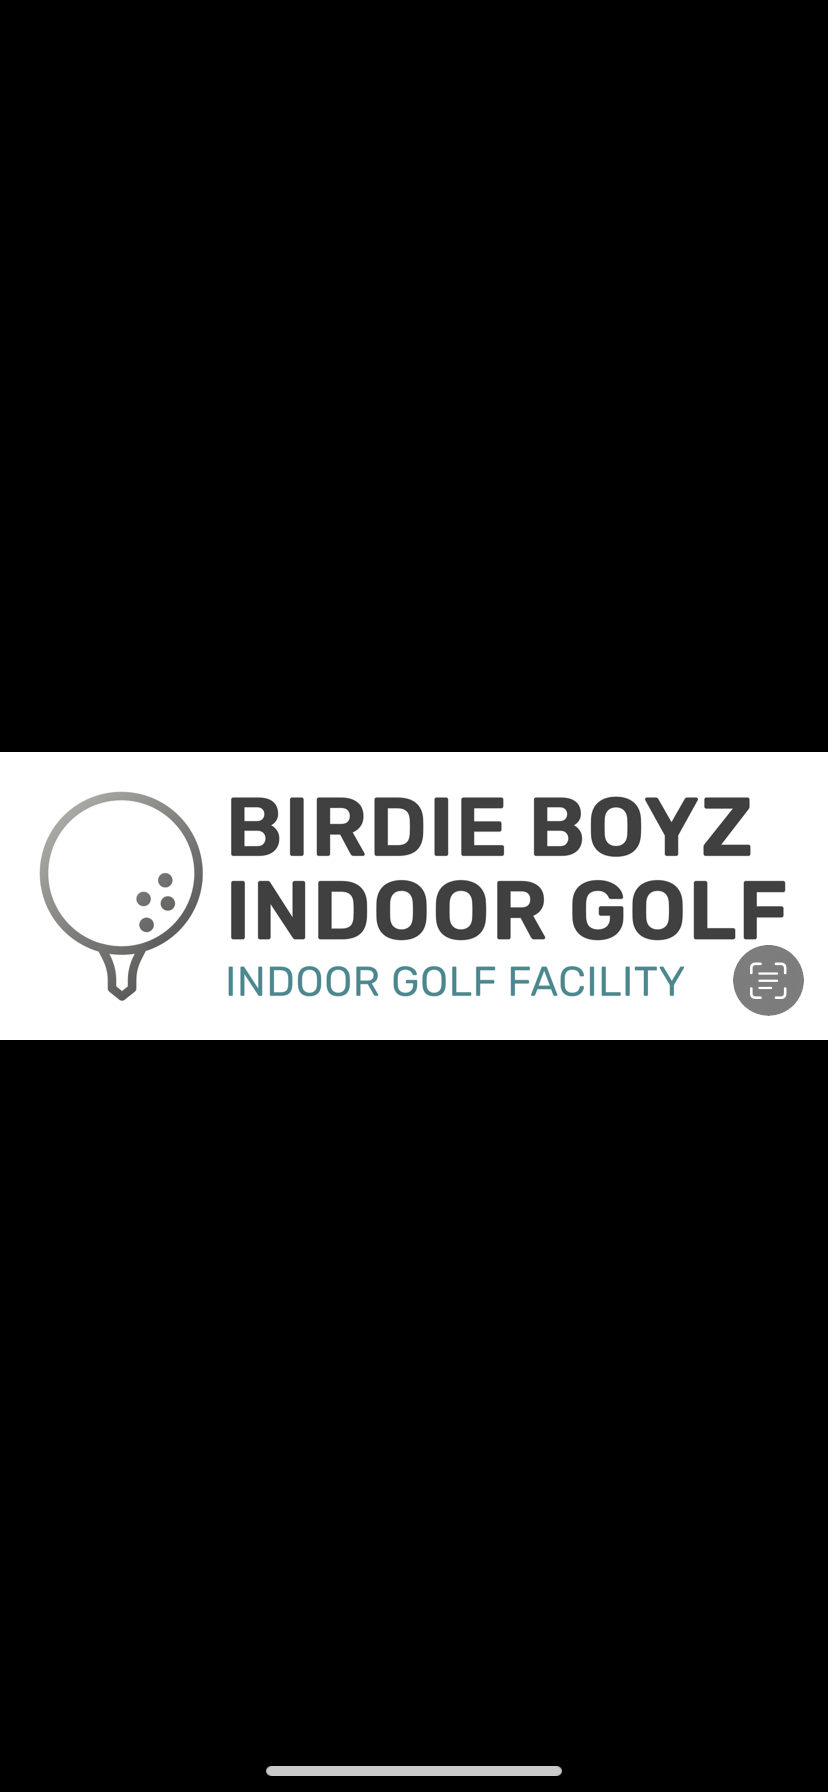 Birdie Boyz Indoor Golf